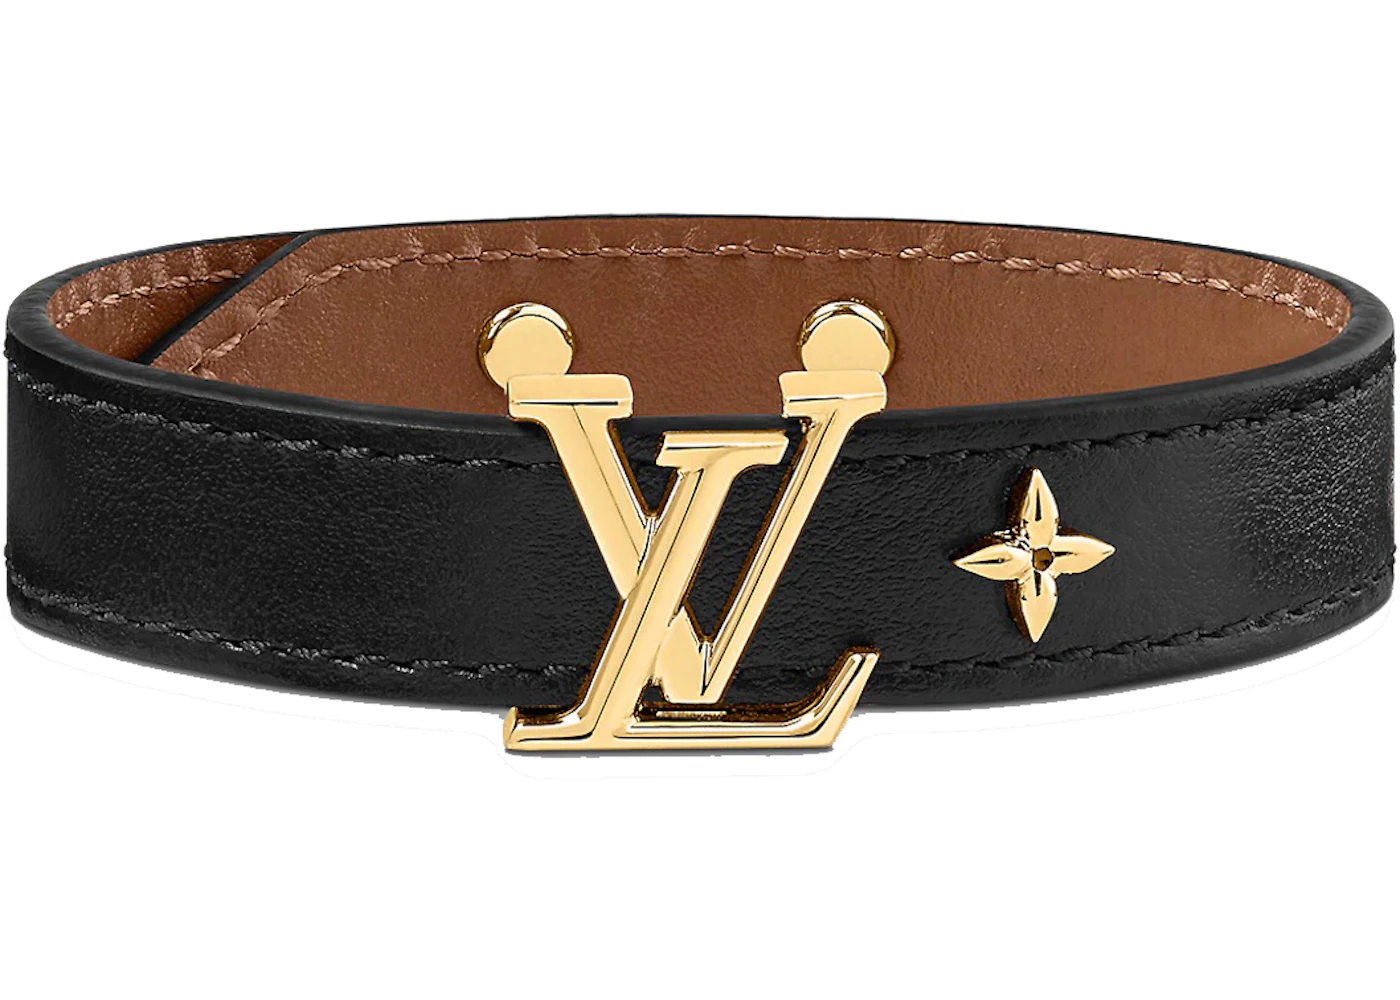 lv iconic bracelet leather